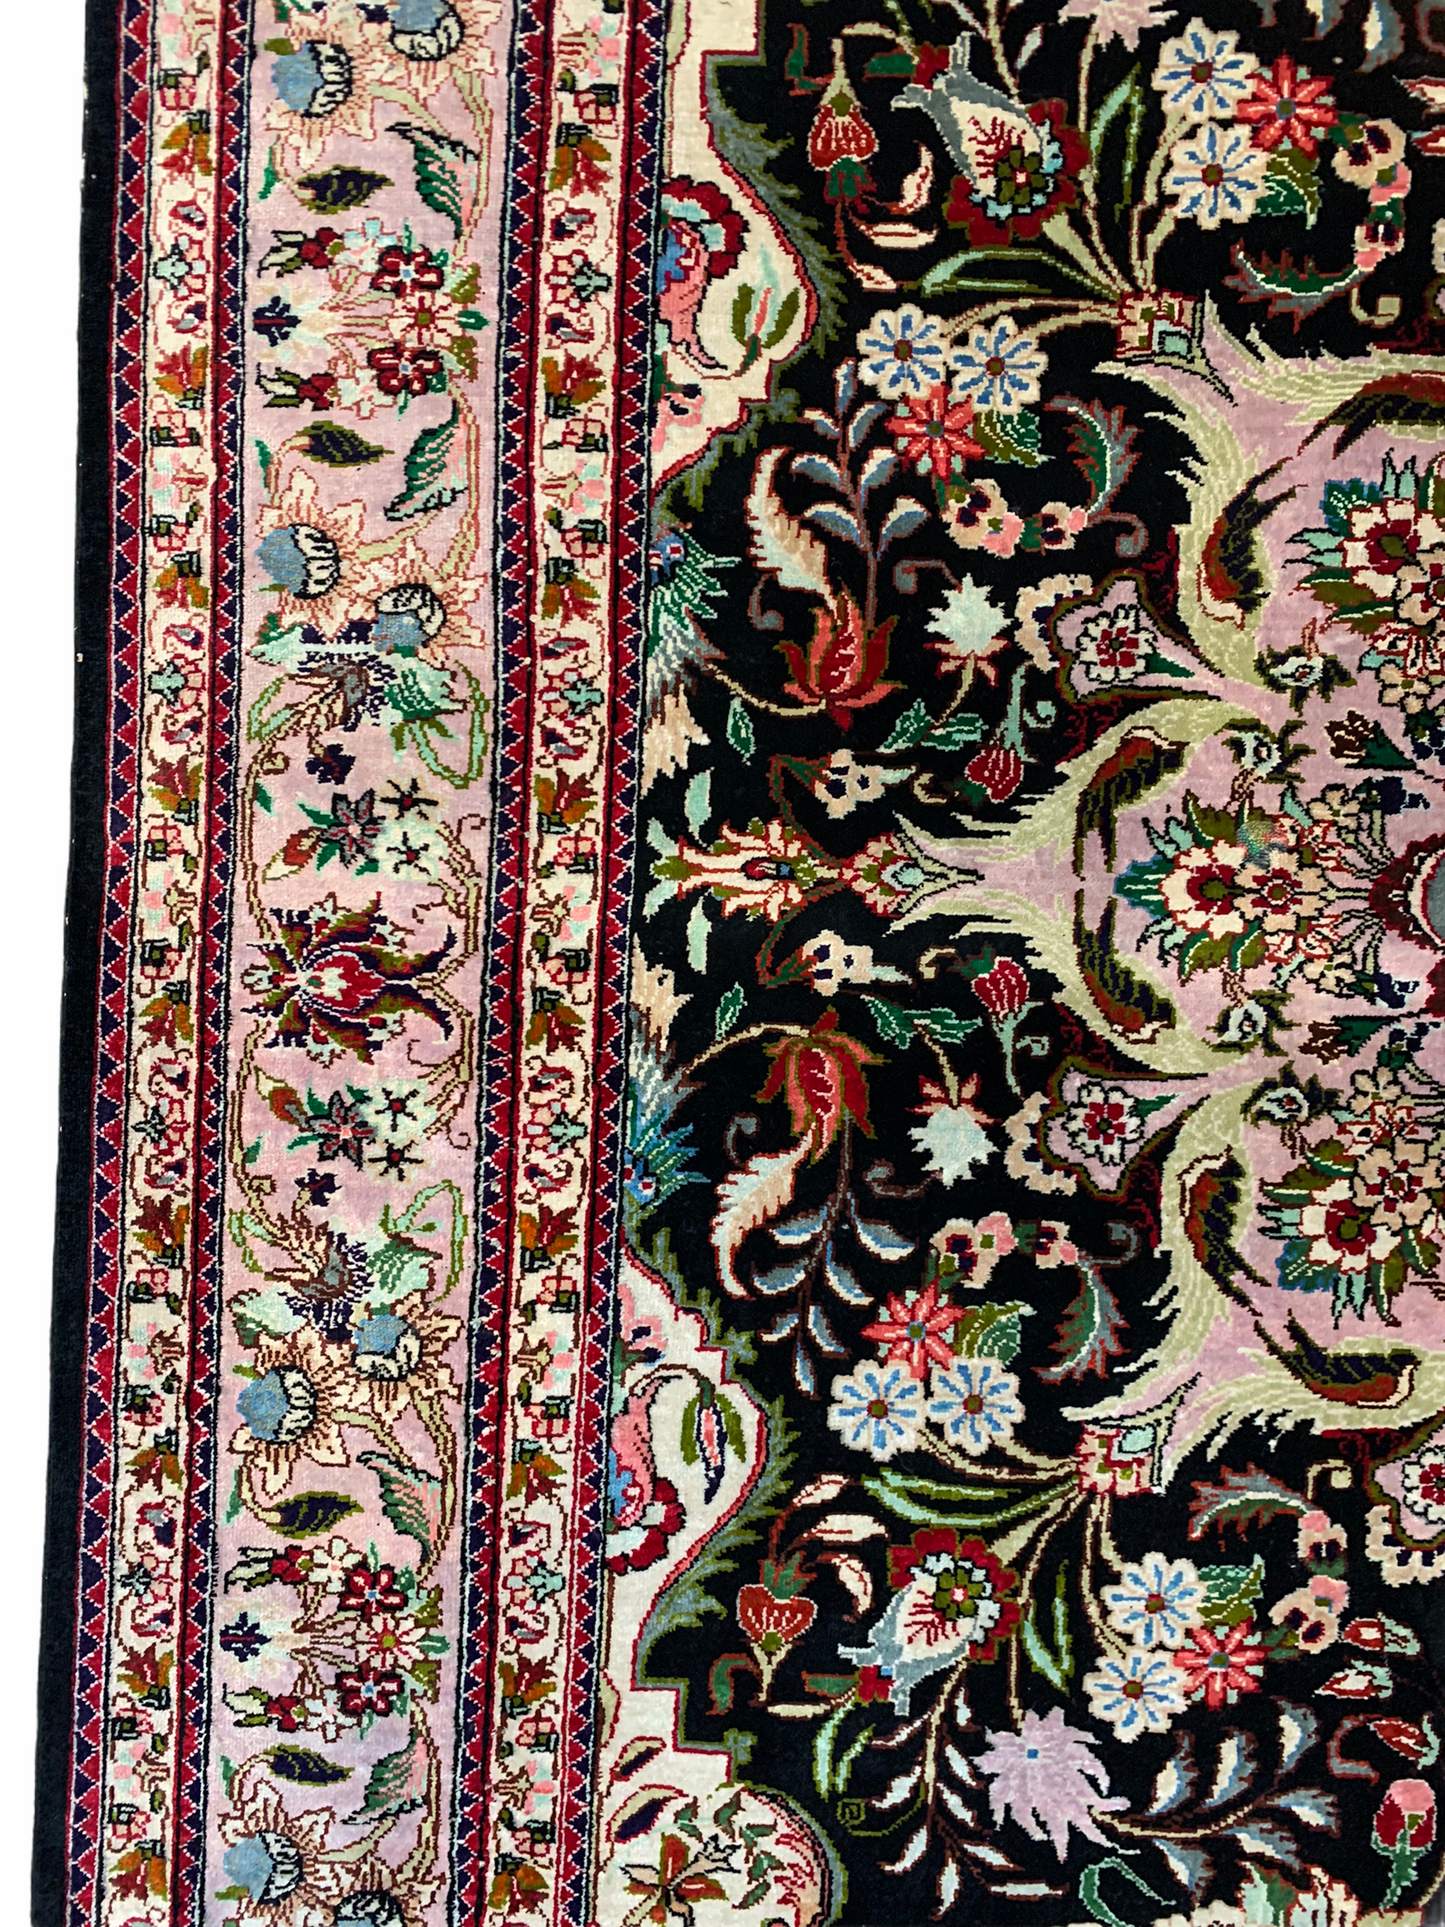 Wonderful vintage decorative Persian Qom silk rug